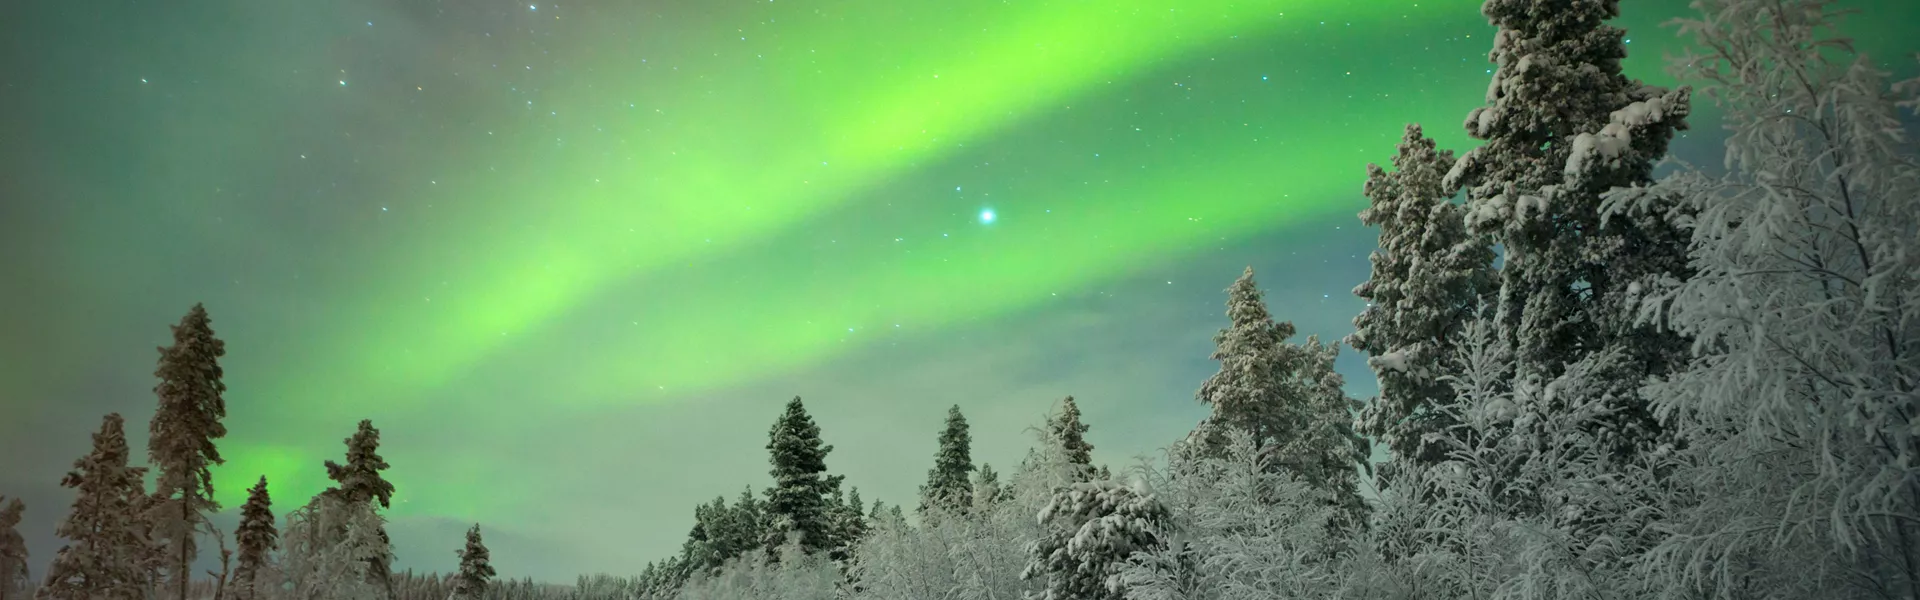 Finland Lapland Northern Lights